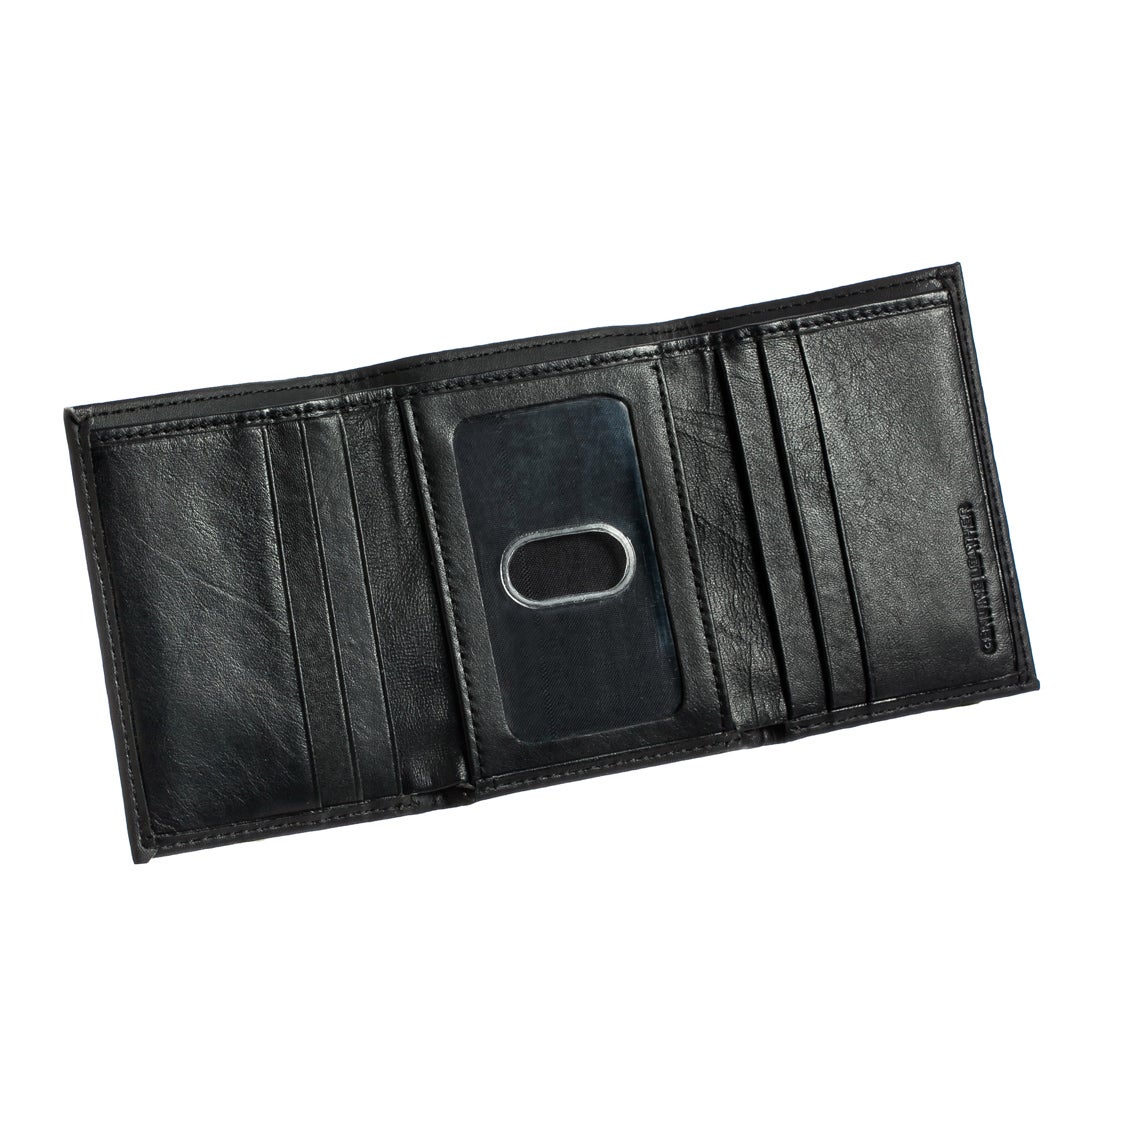 Ohio State University Tri-Fold Leather Wallet